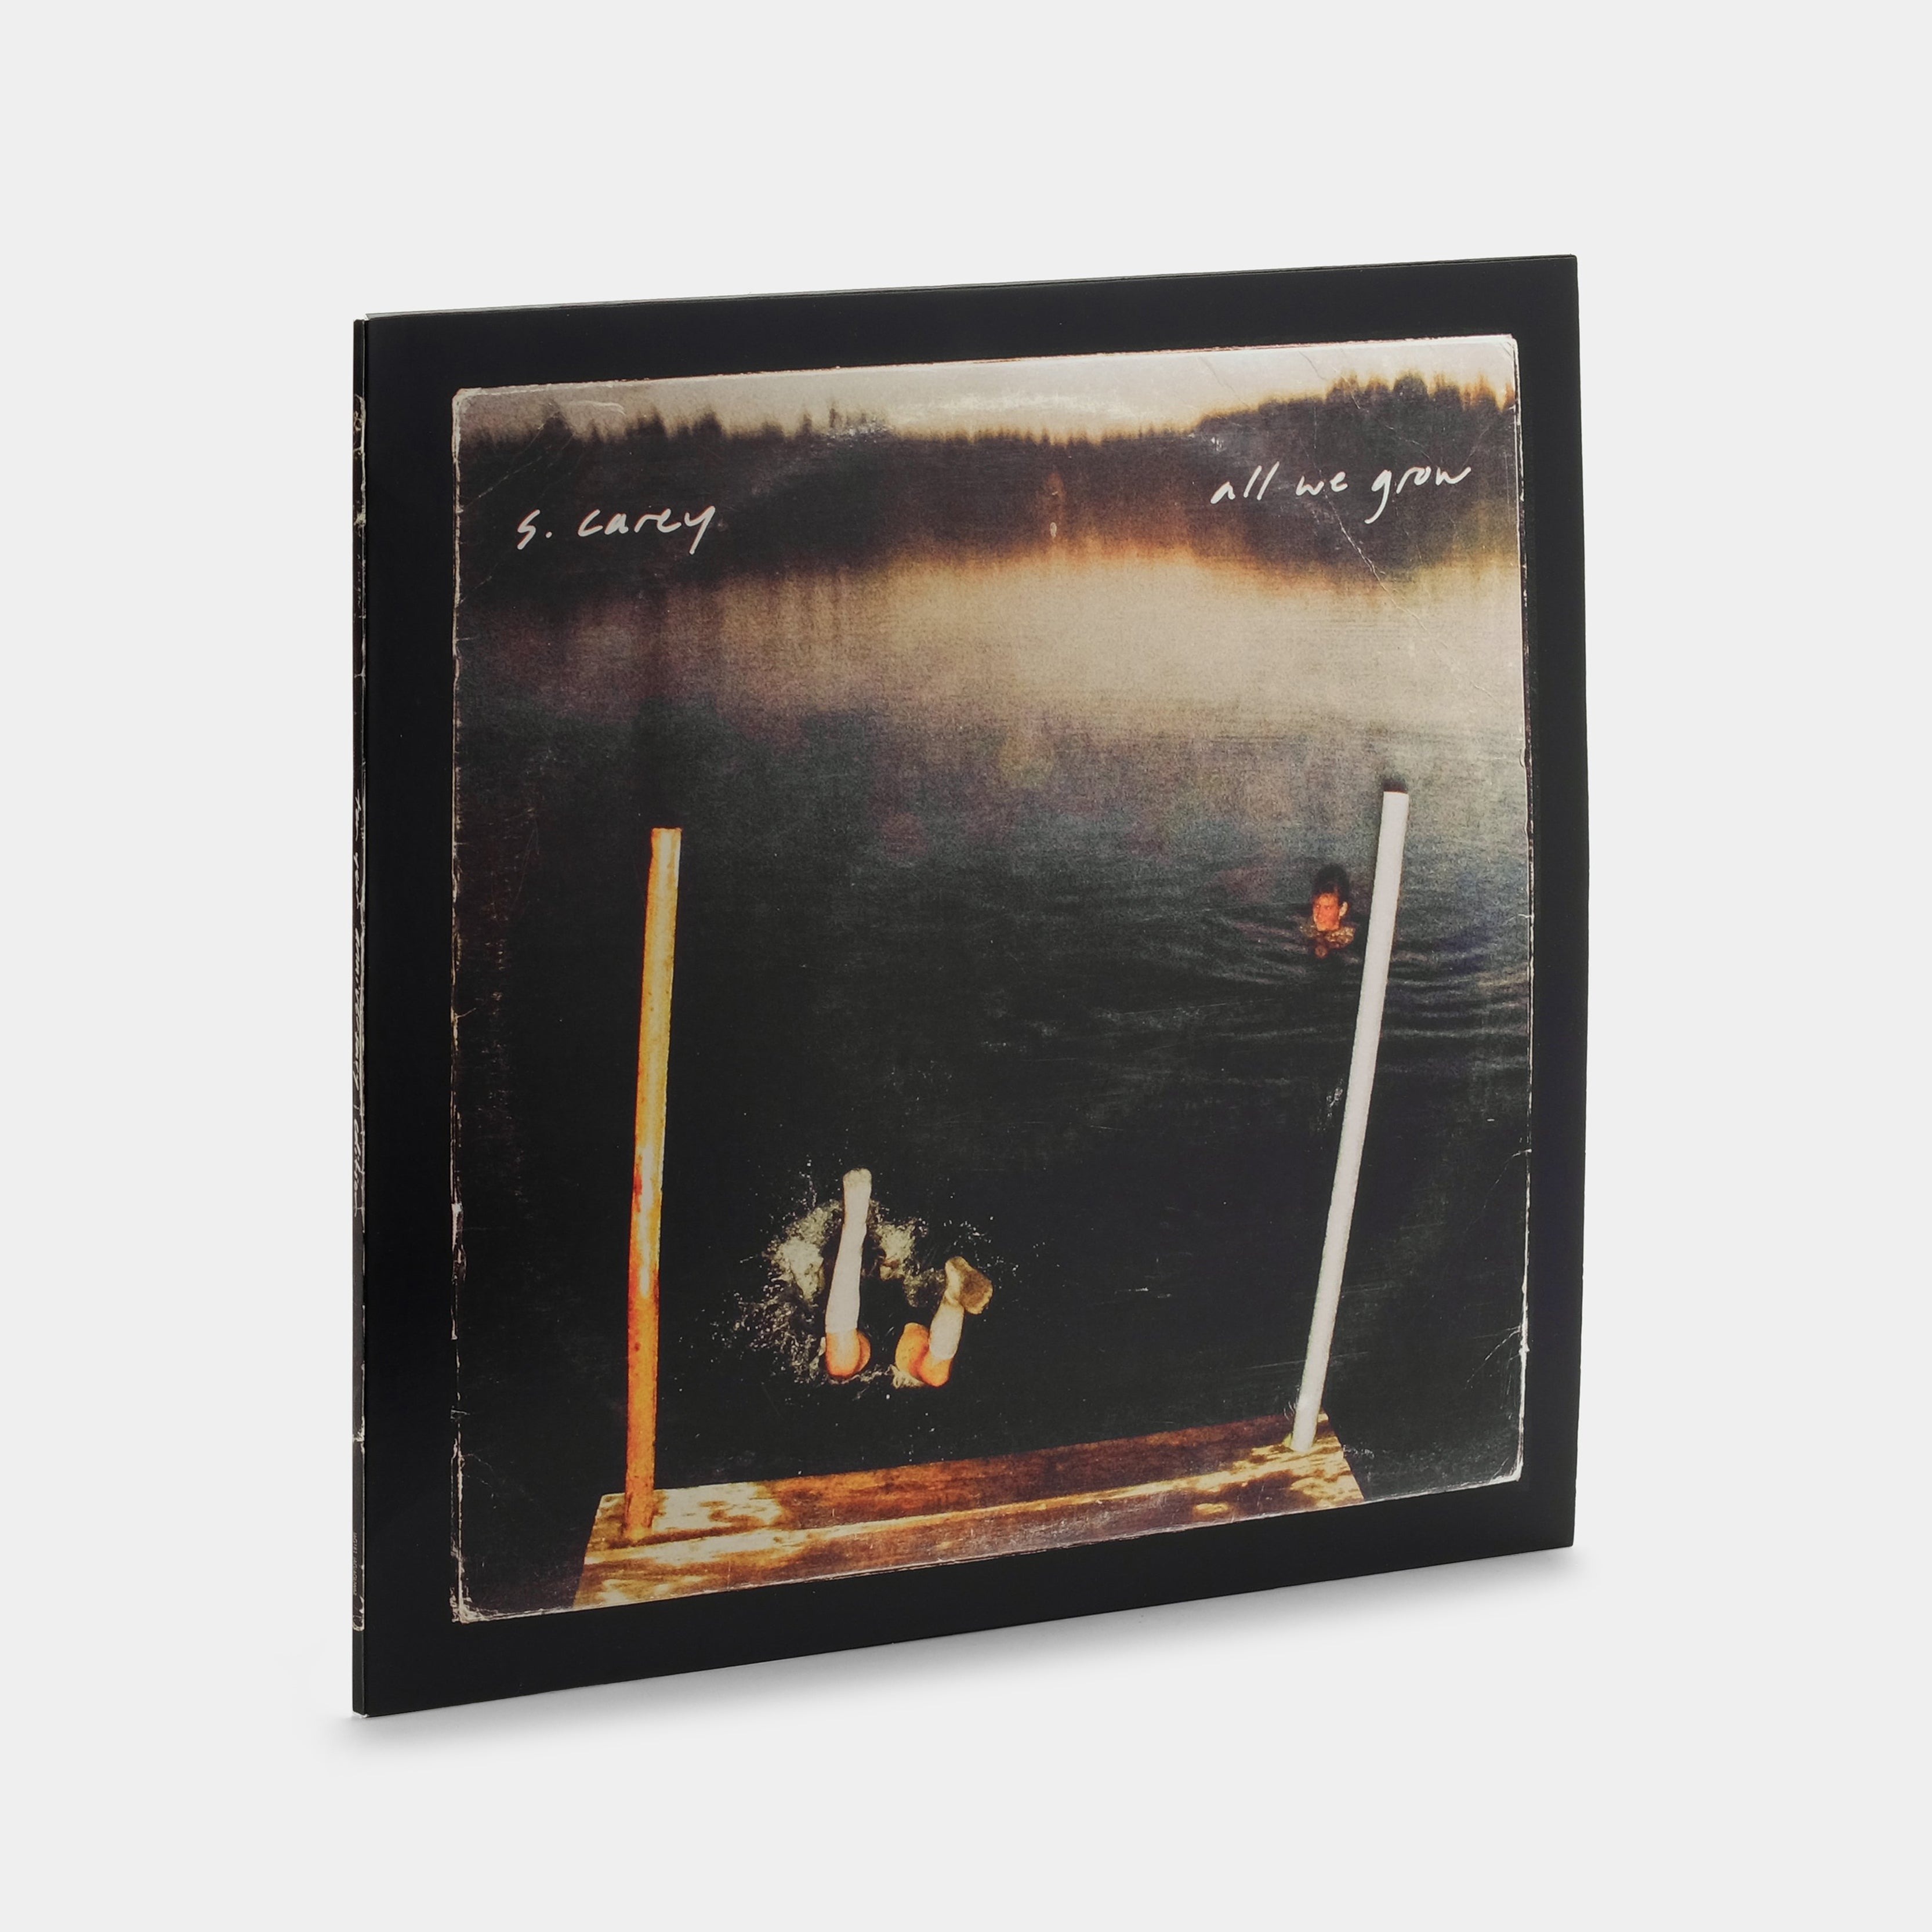 S. Carey - All We Grow (10th Anniversary Edition) LP Translucent Sea Glass Wave Vinyl Record